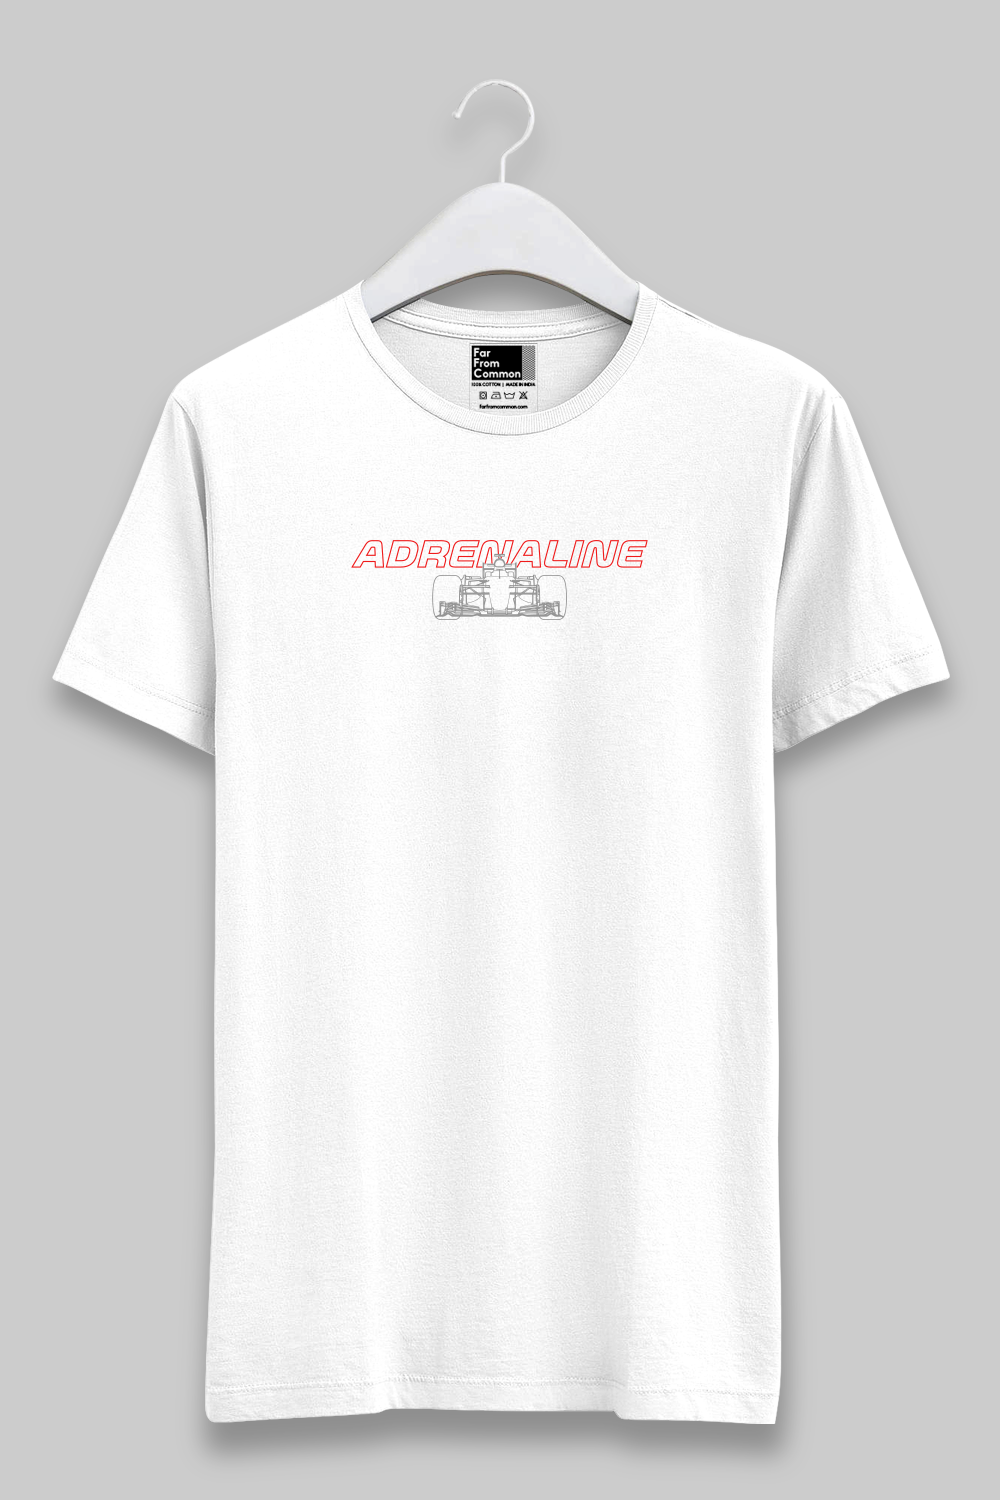 Adrenaline White Unisex T-shirt